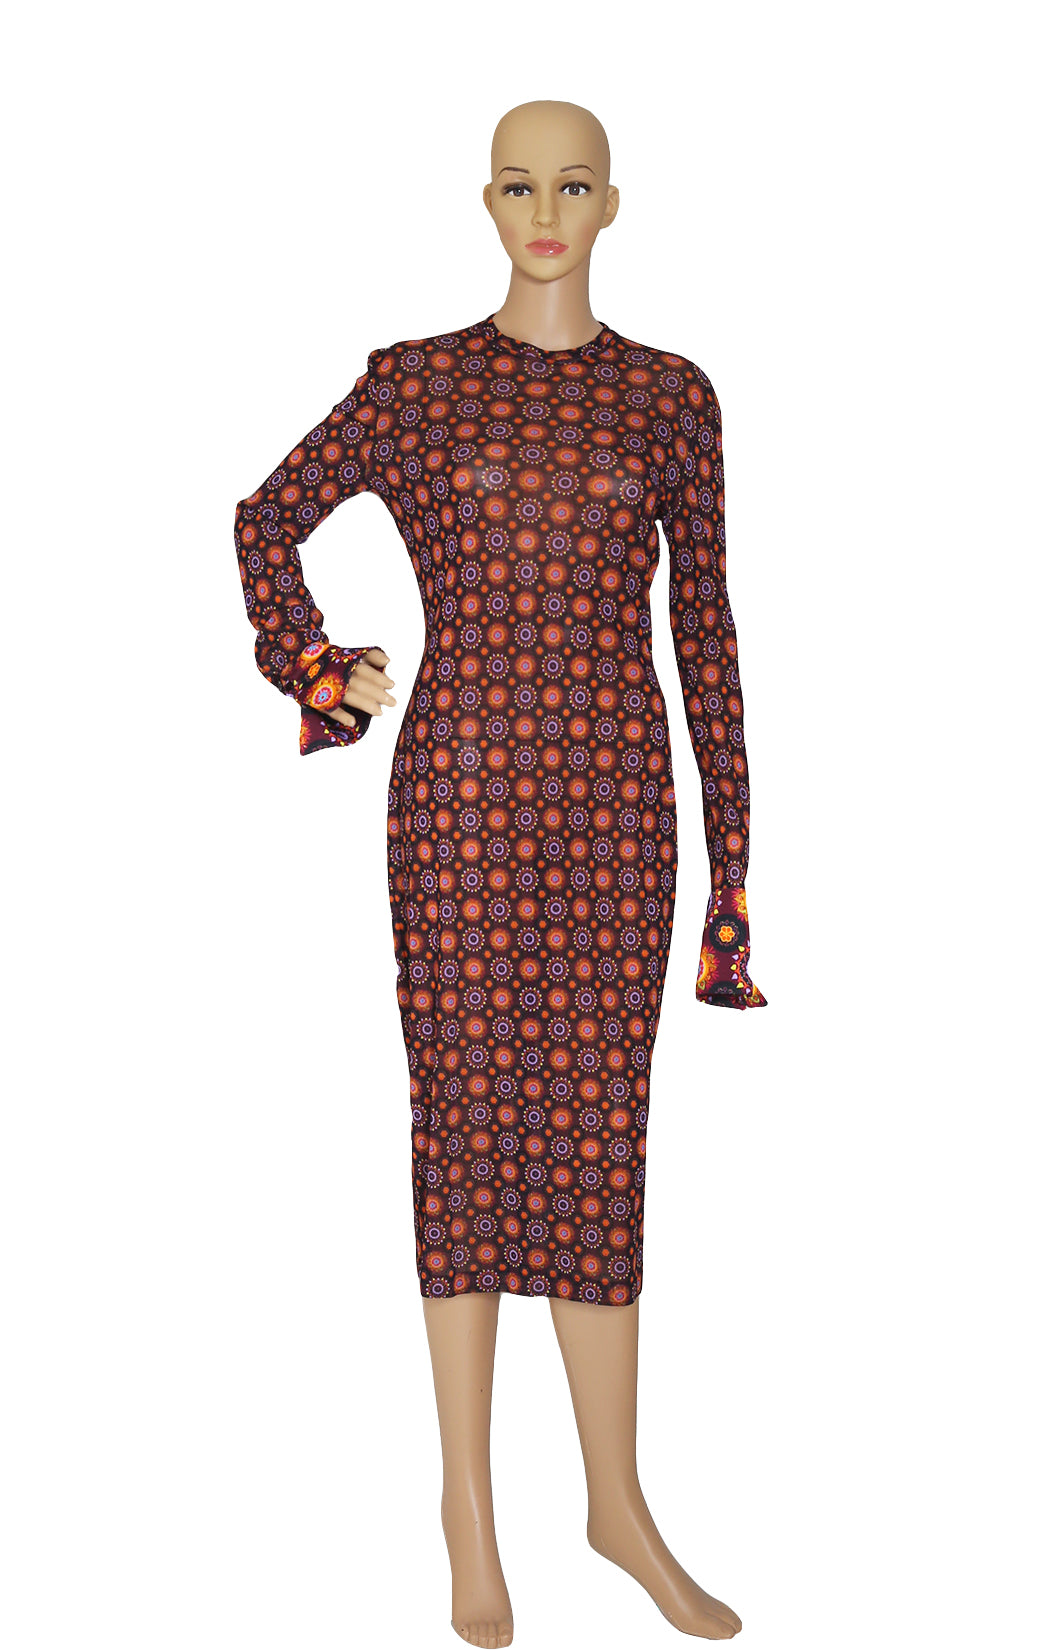 GIVENCHY Print Dress Size: FR 40 (US 8 